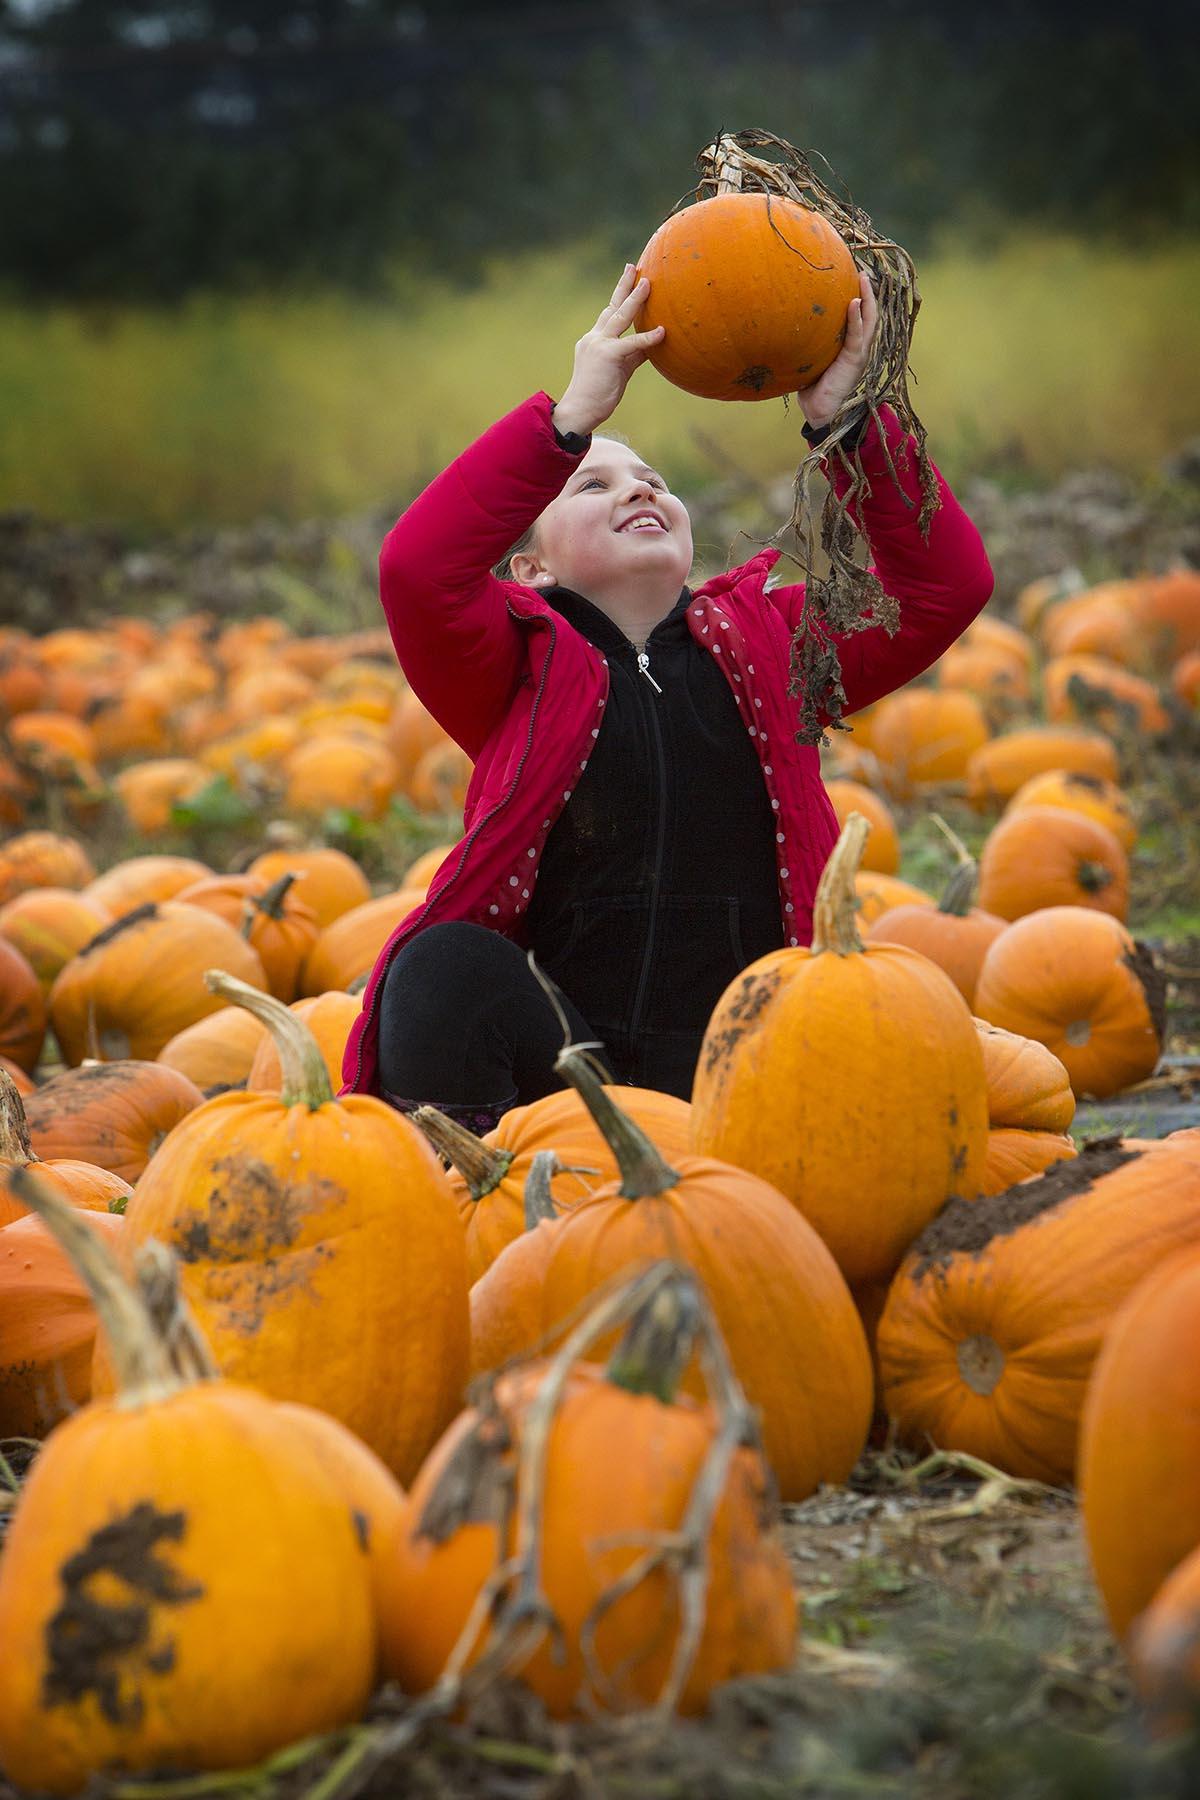 Eleanor Dance, 10, among thousands of pumpkins at Millets Farm